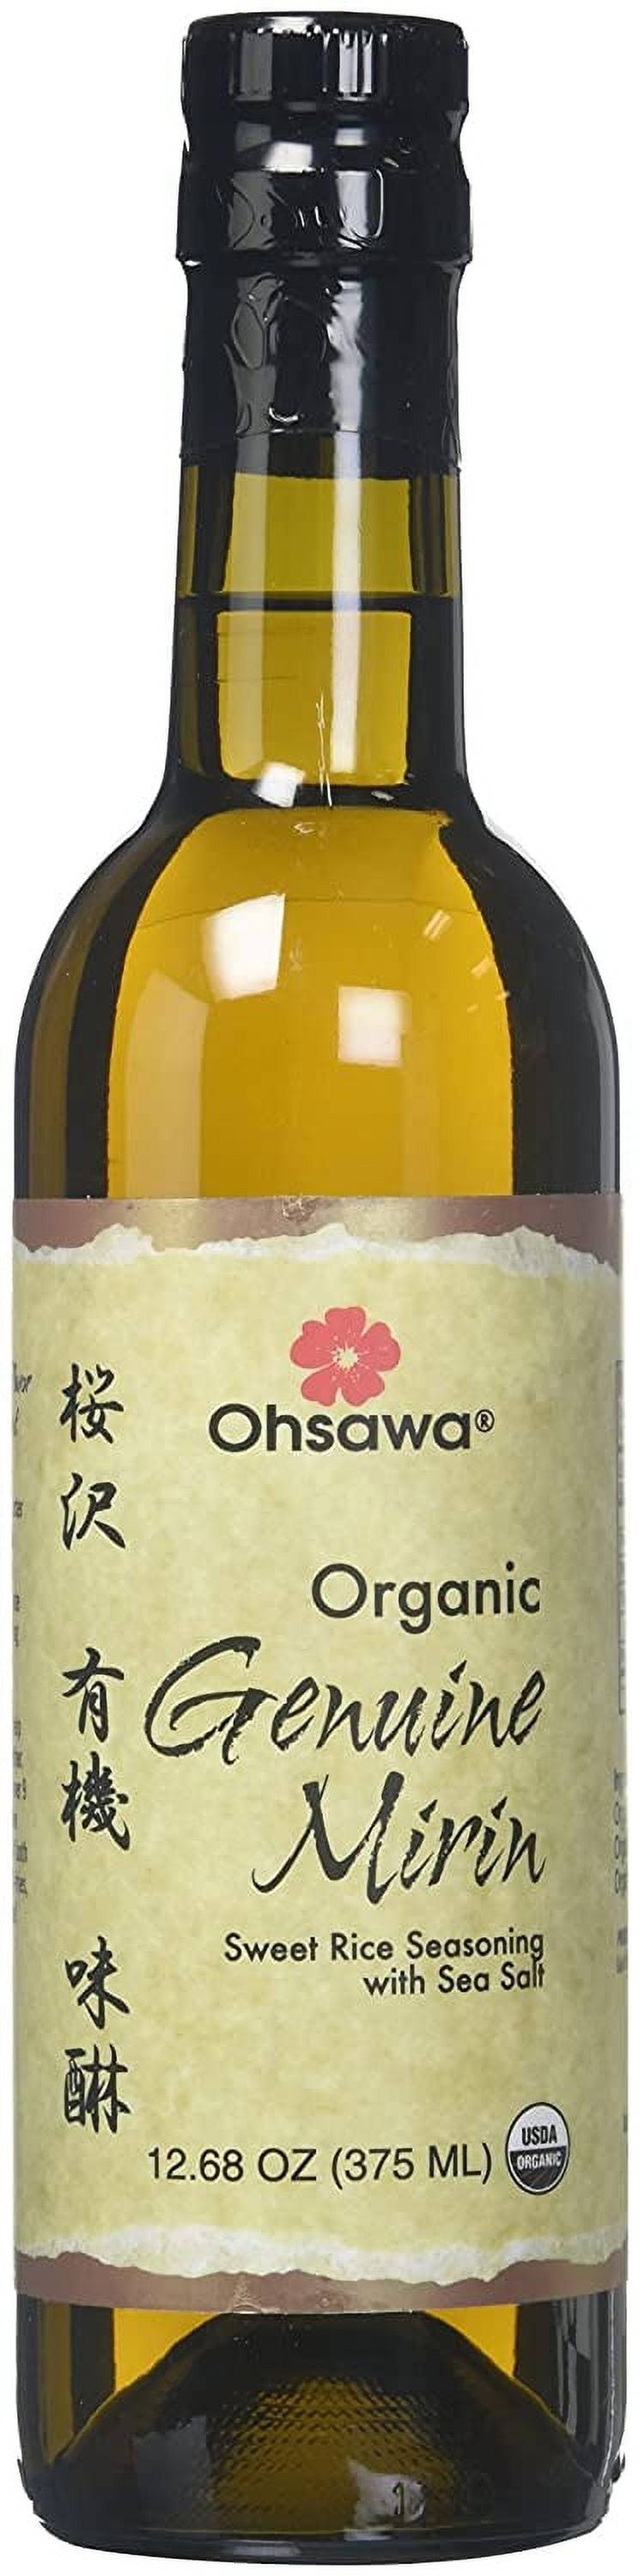 Ohsawa Genuine Mirin, Organic Sweet Rice Seasoning Wine for Traditiona